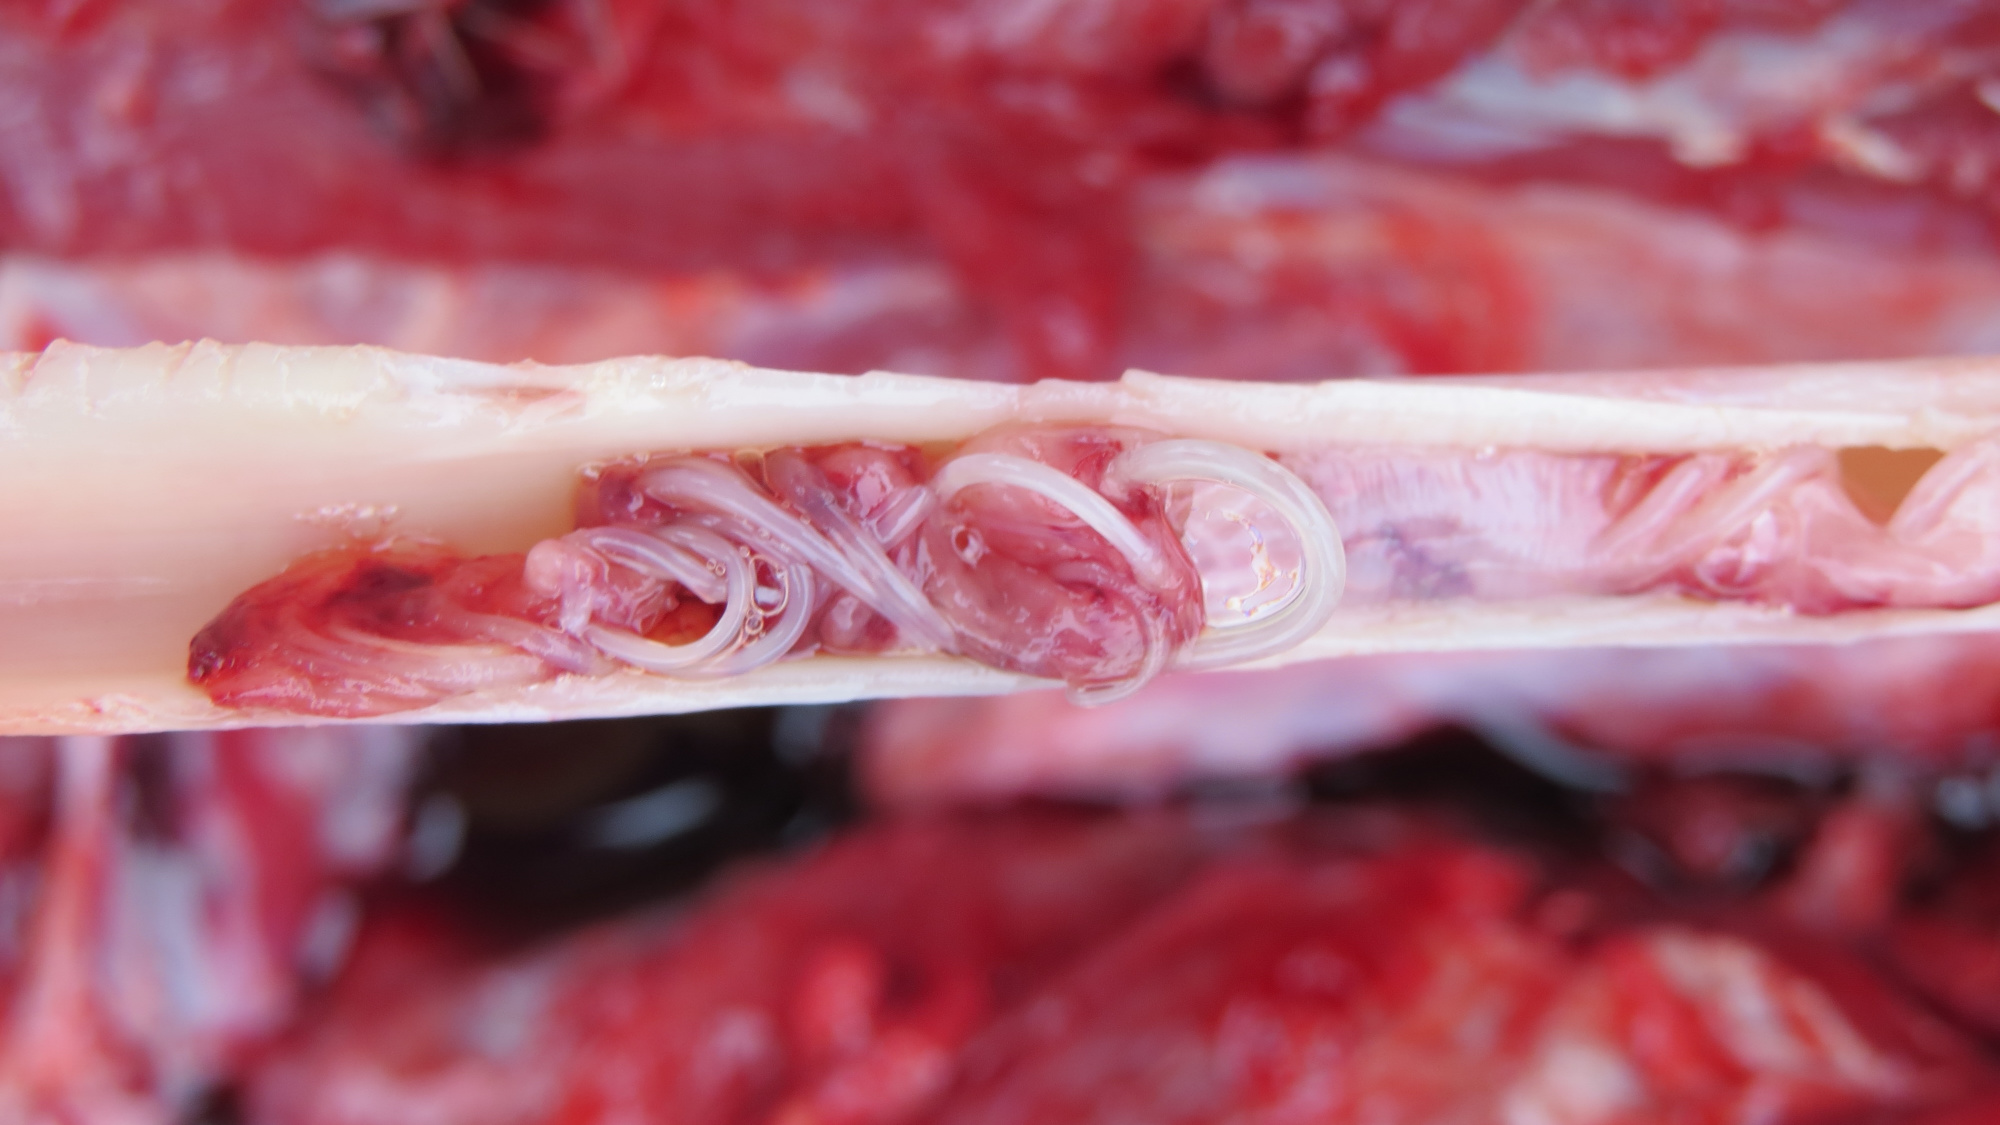 Arterial worm clogs the carotid artery of a cervid.